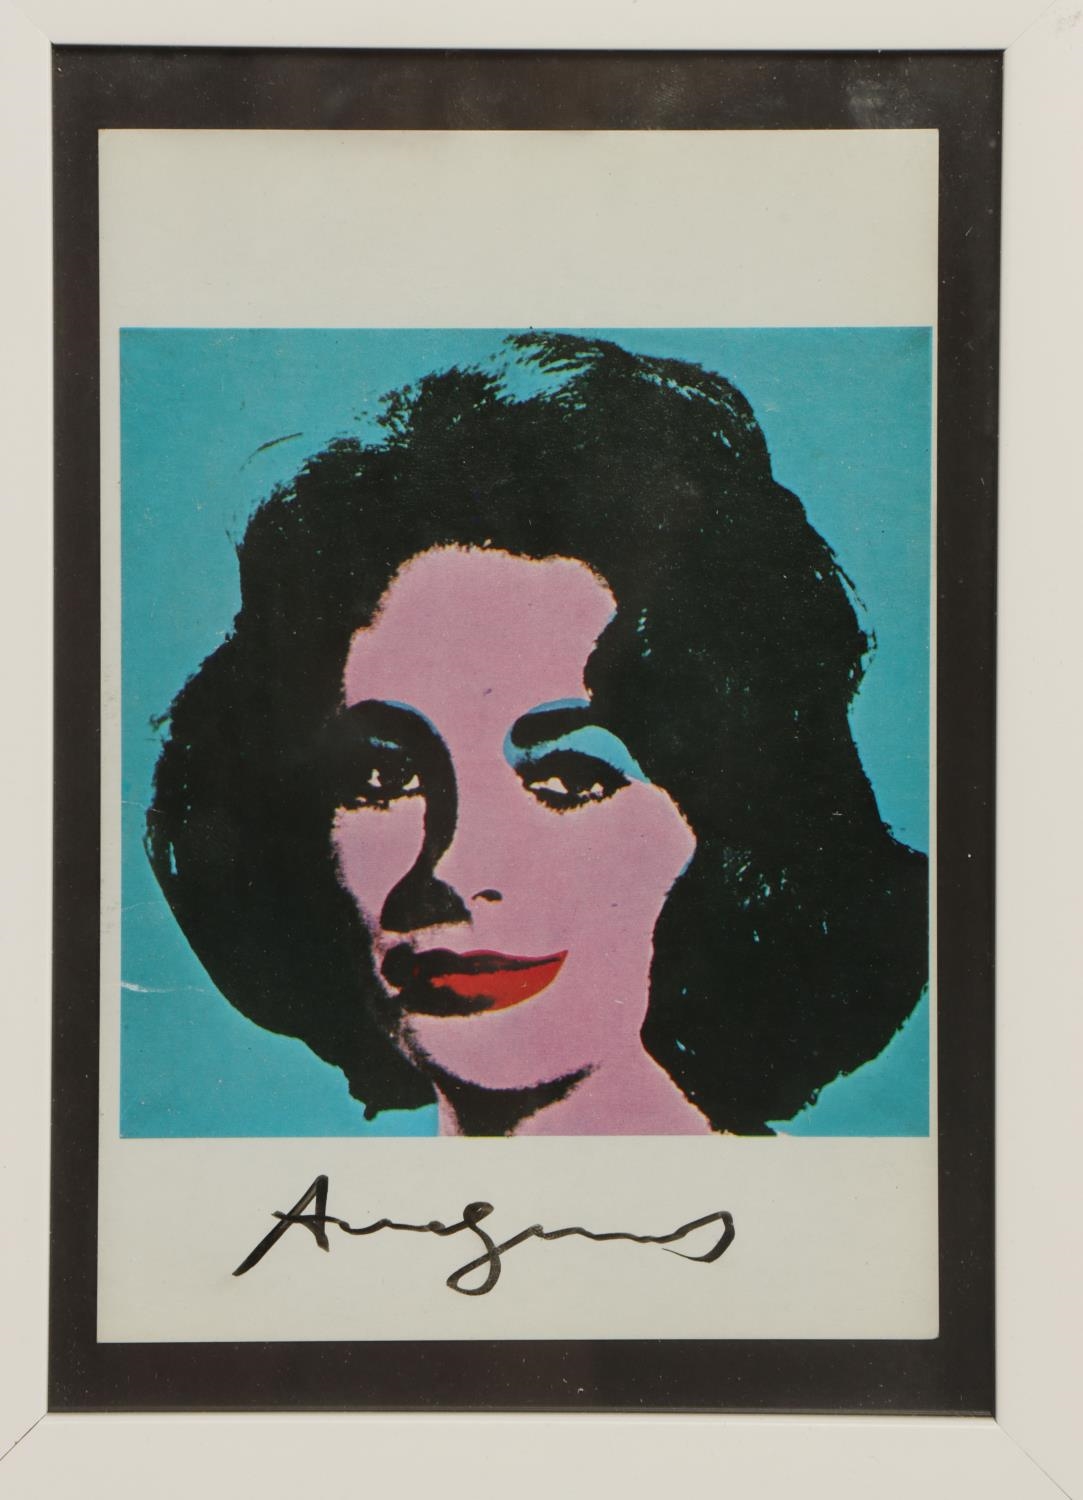 LIZ by Andy Warhol, 1963